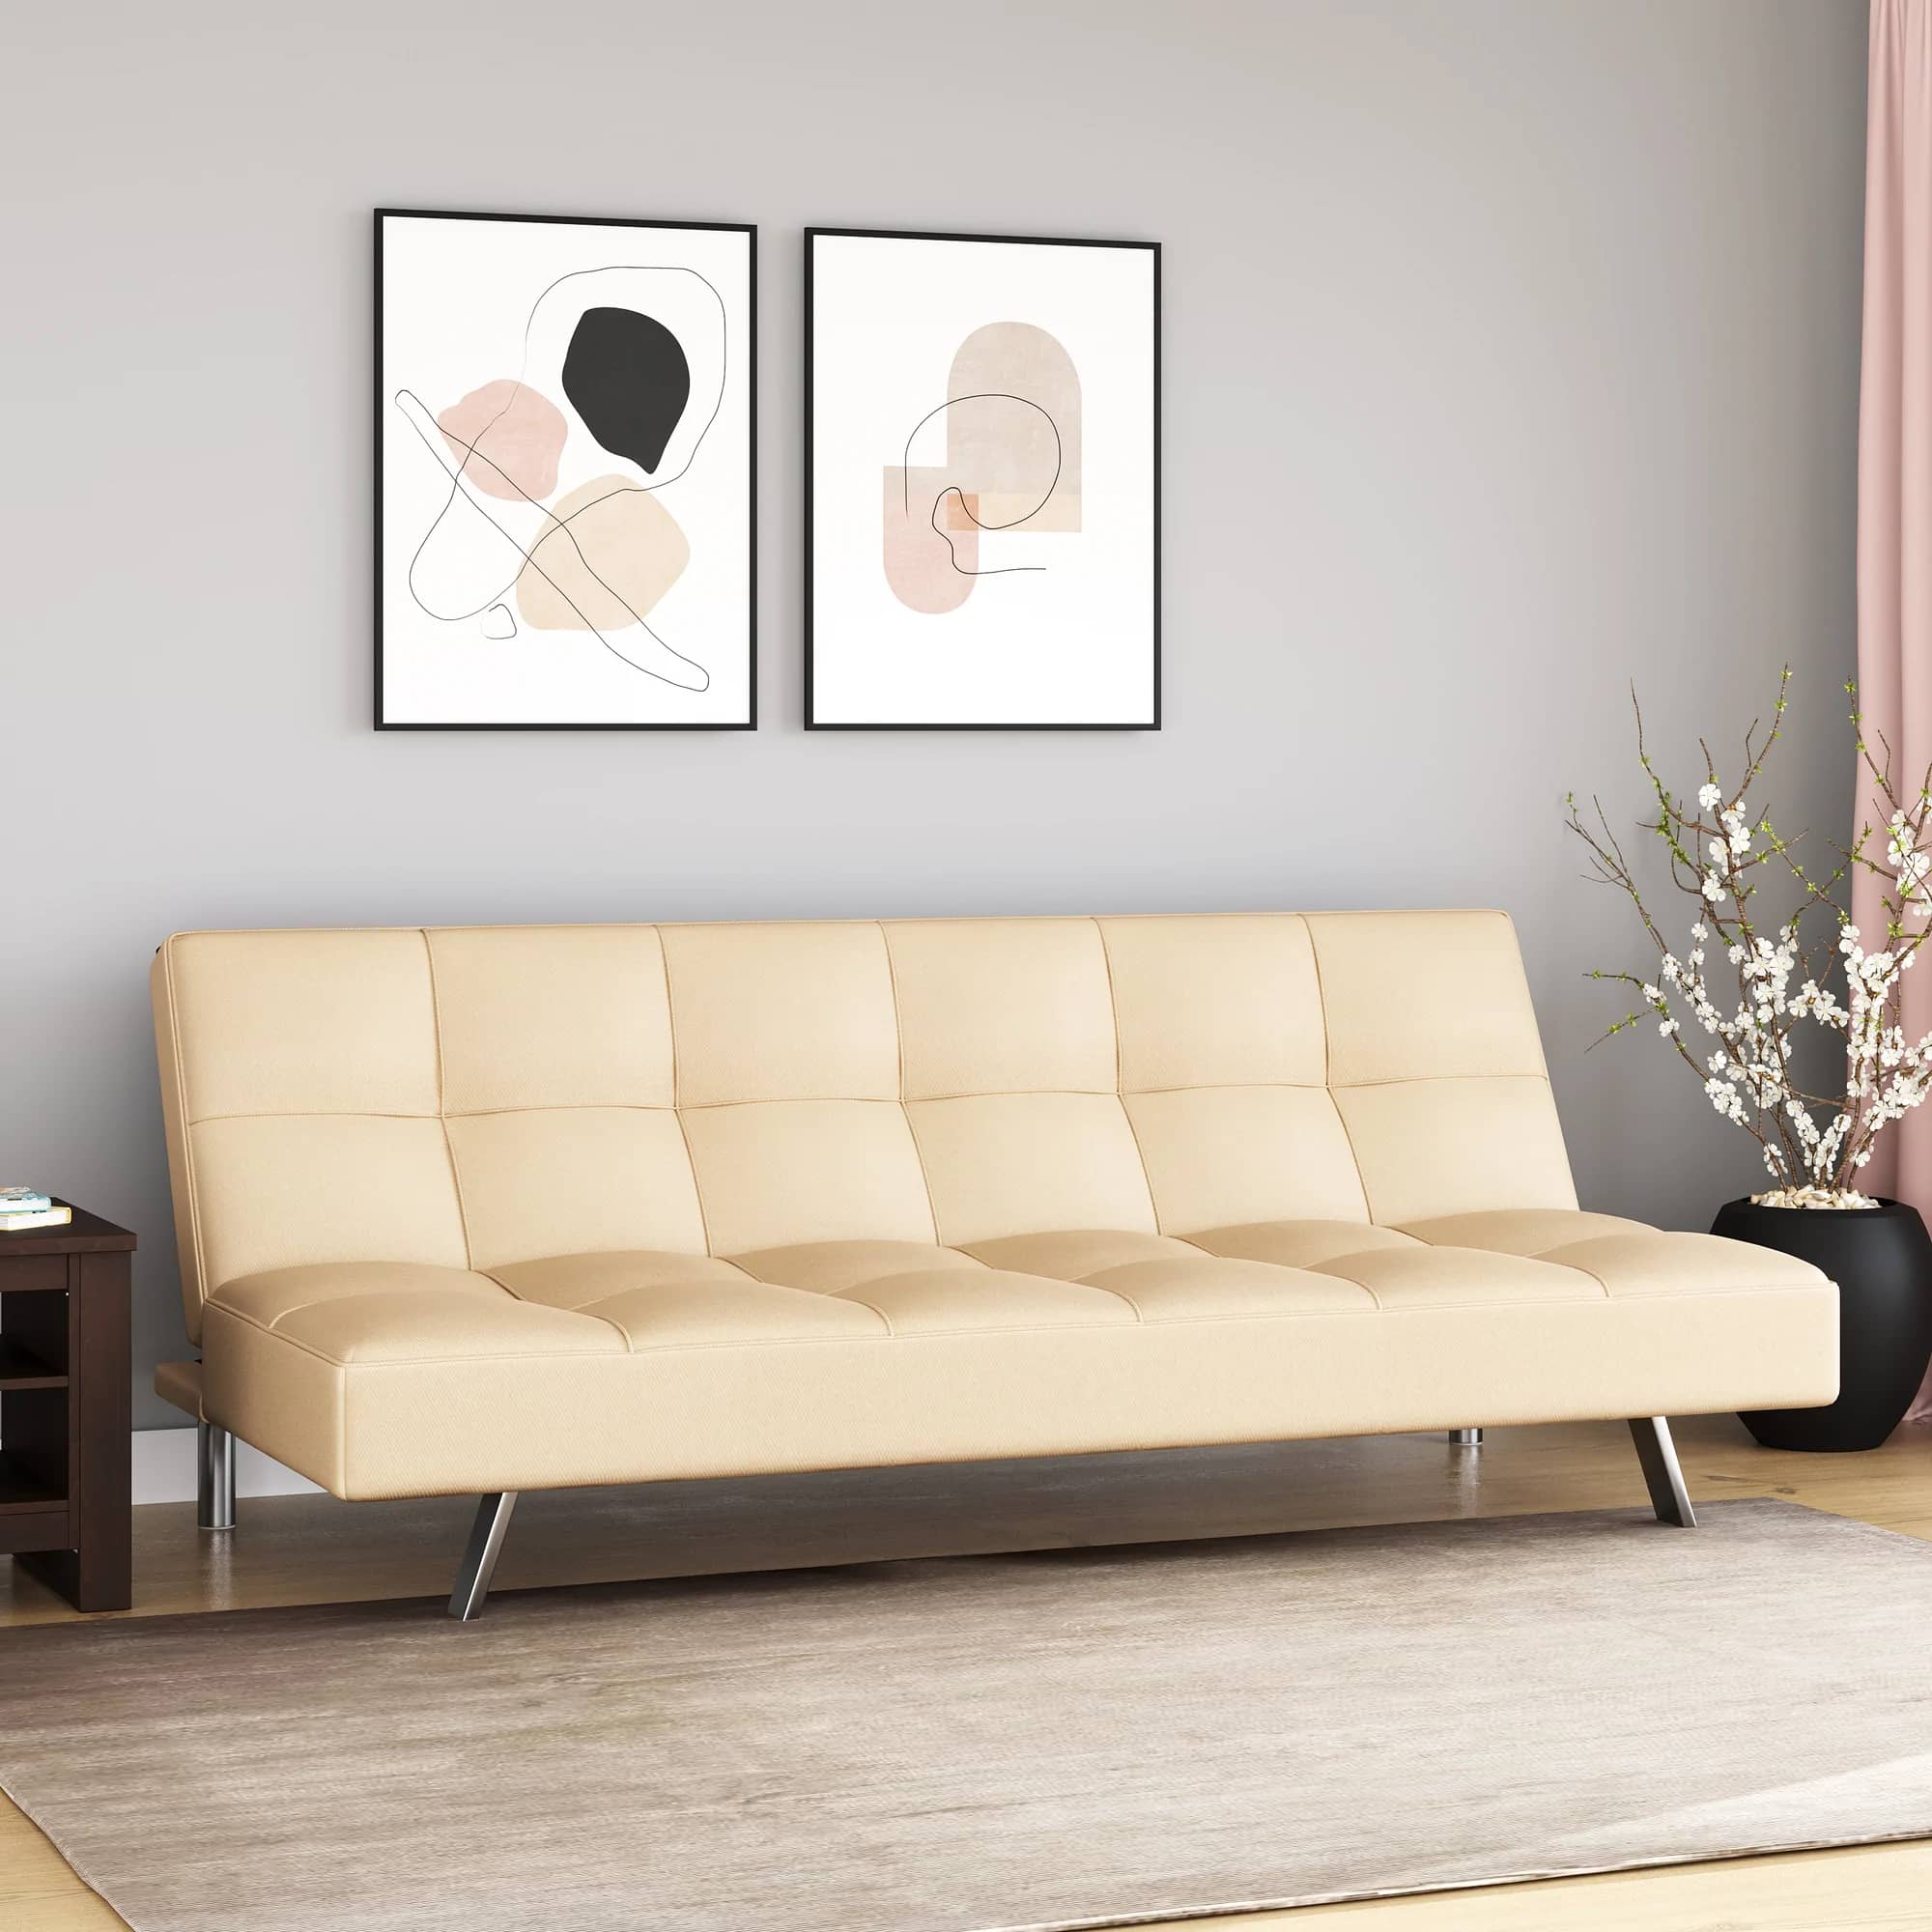 dark beige sofa cum bed, carpet, minimal living room, grey wall, painting on wall, side table